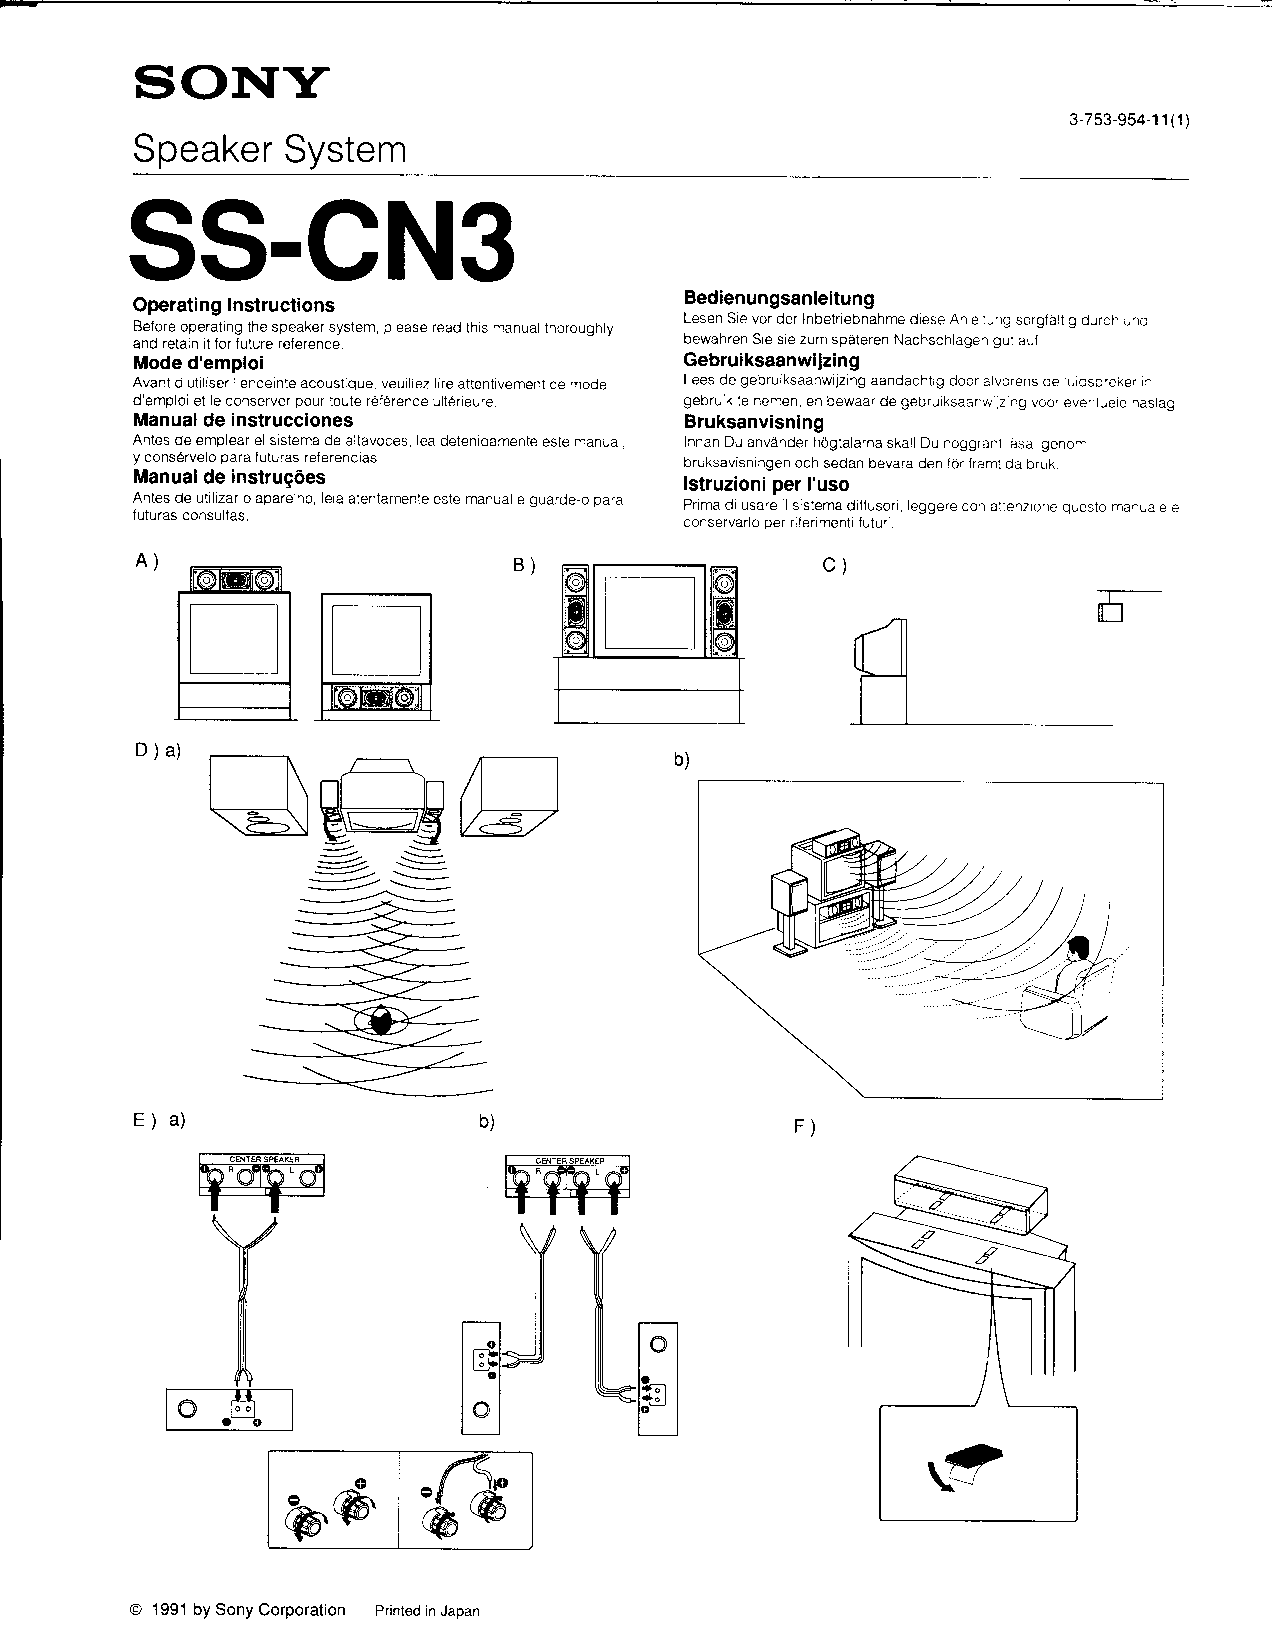 Sony SS-CN3 User Manual